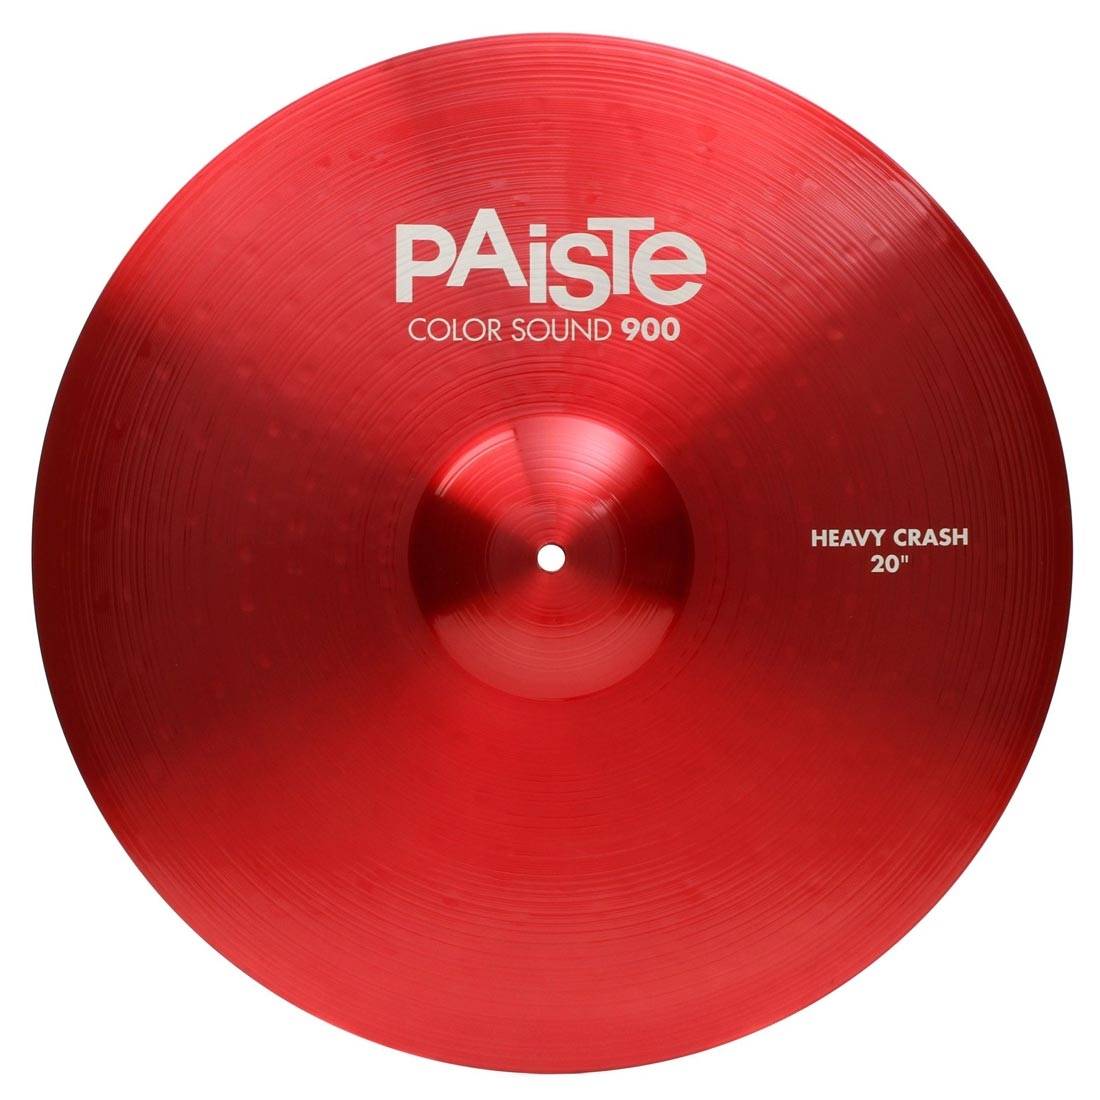 PAISTE 900 Color Sound 20'' Red Heavy Crash